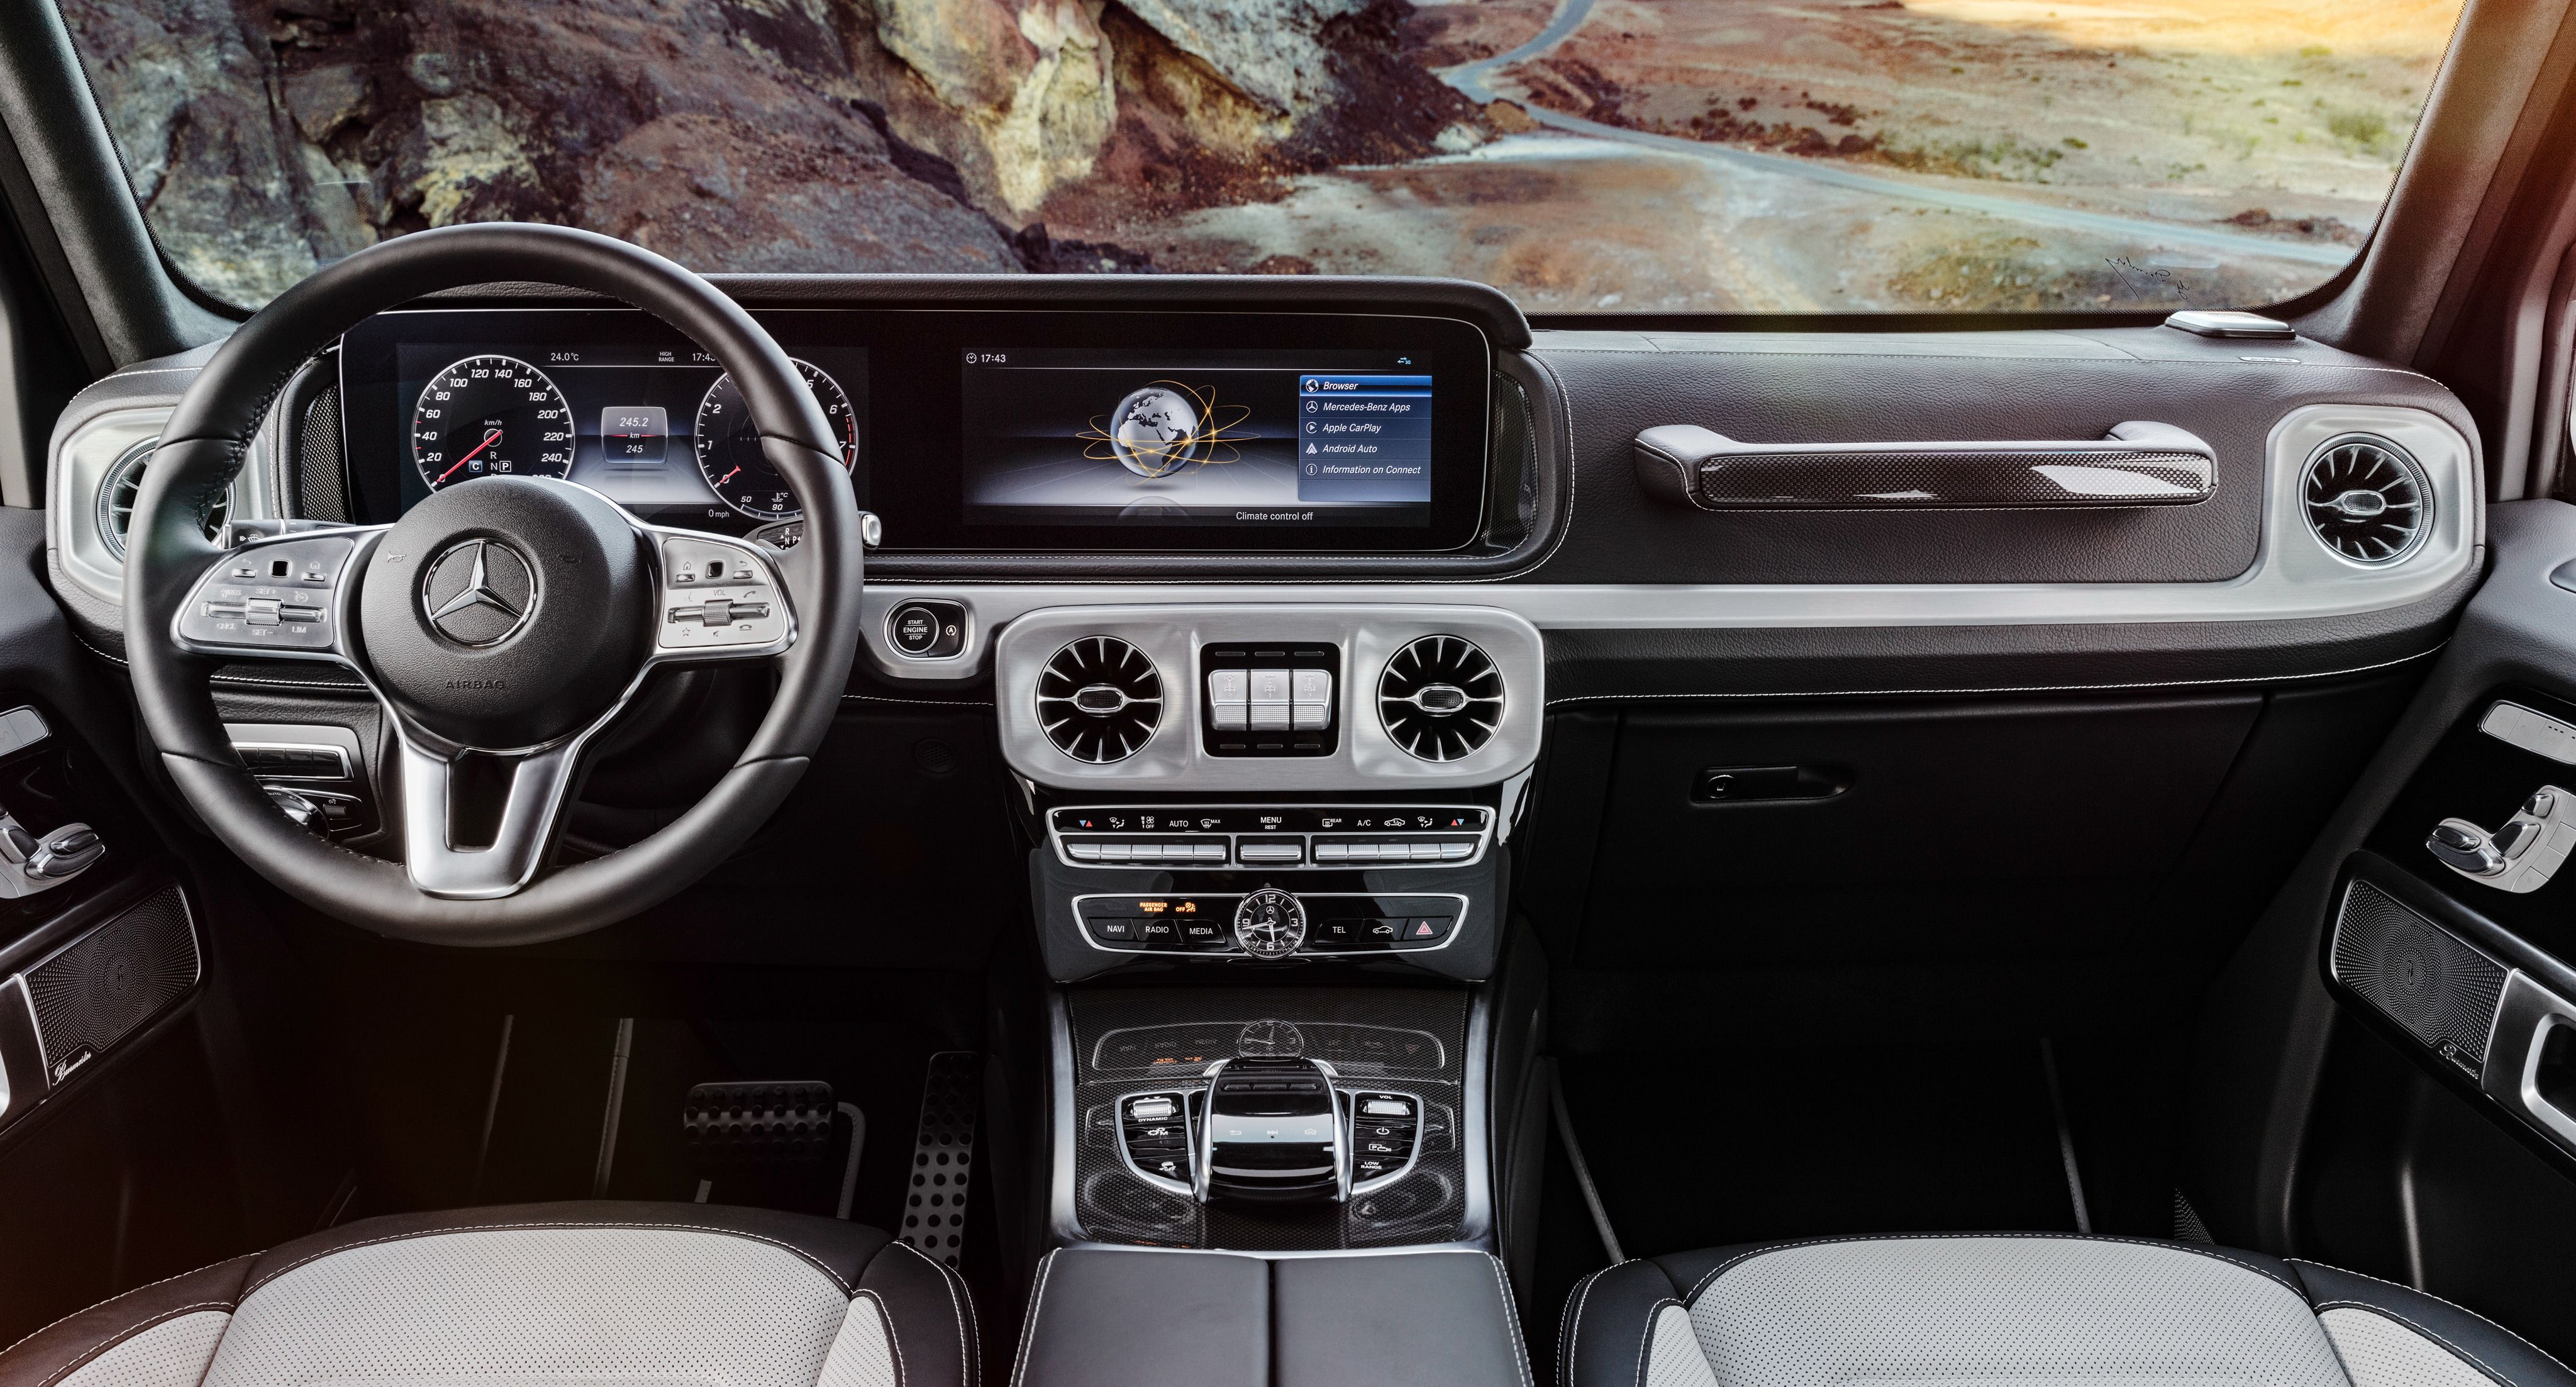 Mercedes G Class Interior, HD Cars, 4k Wallpaper, Image